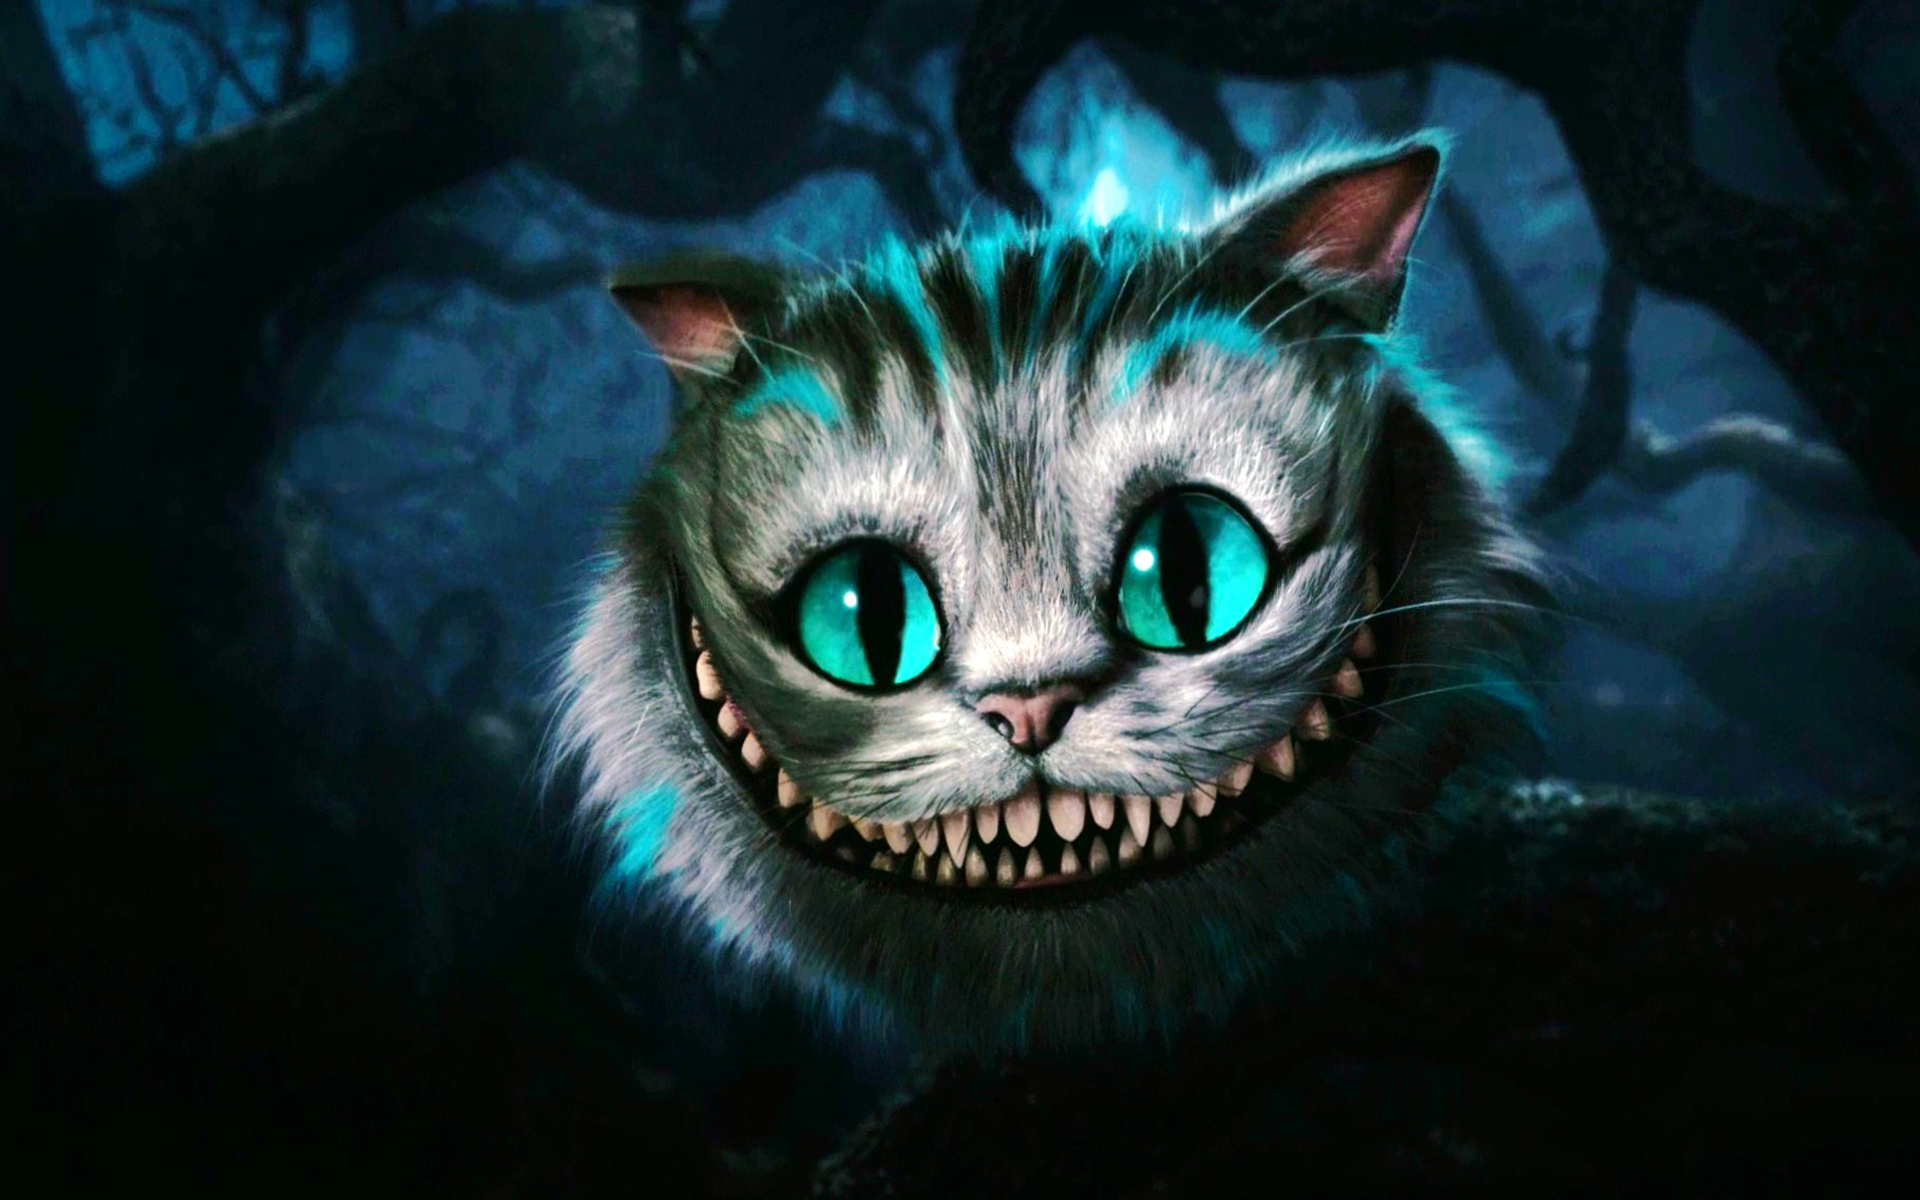 8. The Cheshire Cat (Alice in Wonderland) - wide 3